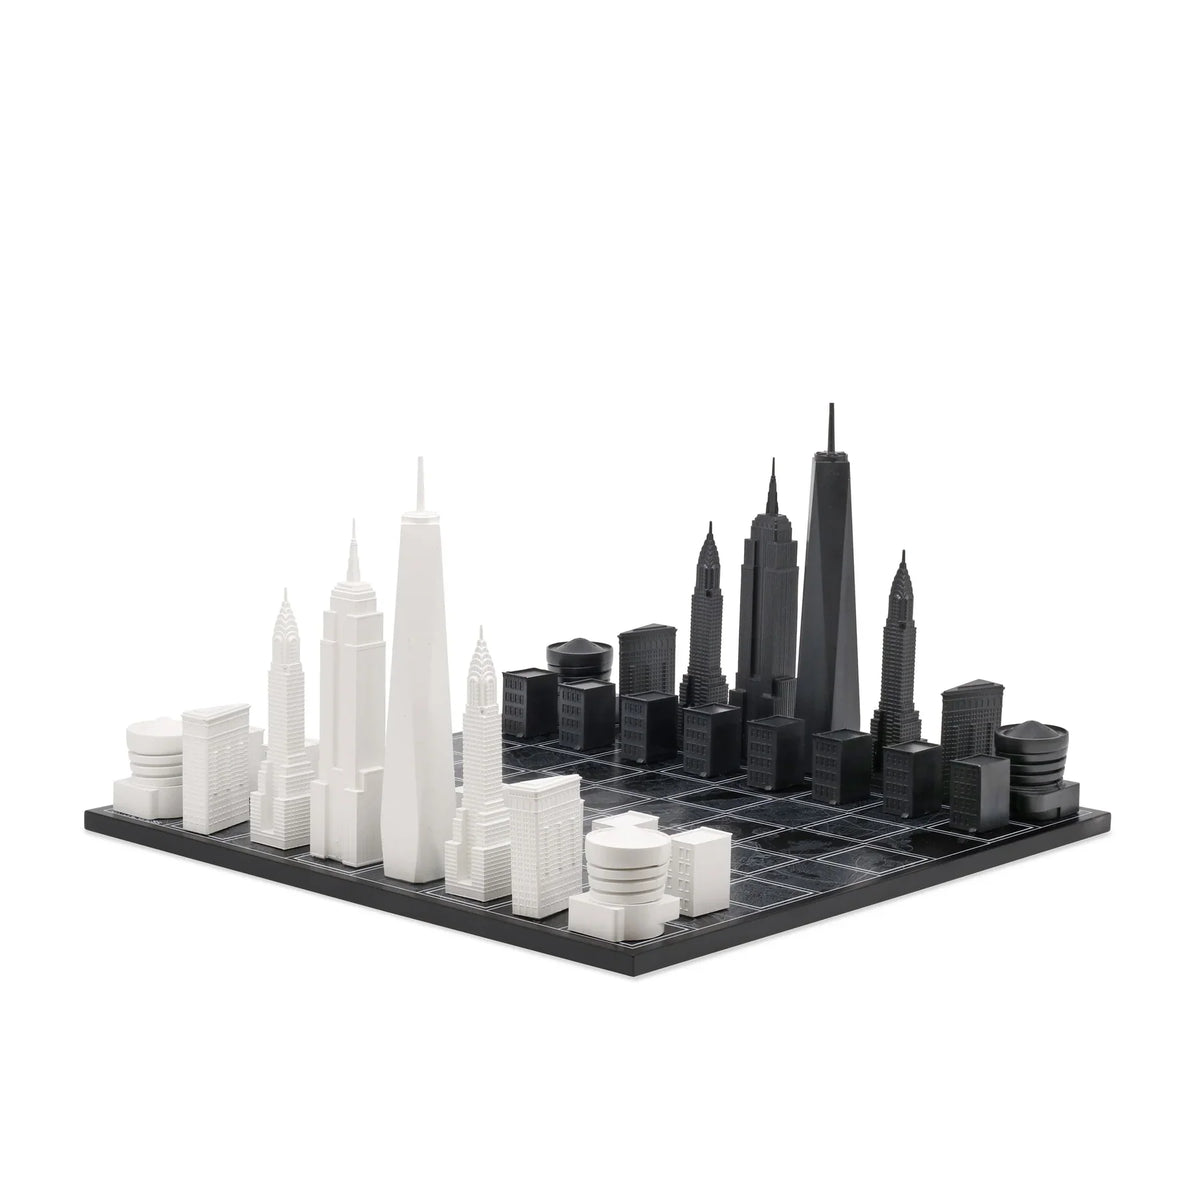 The New York City Chess Set - Acrylic Edition